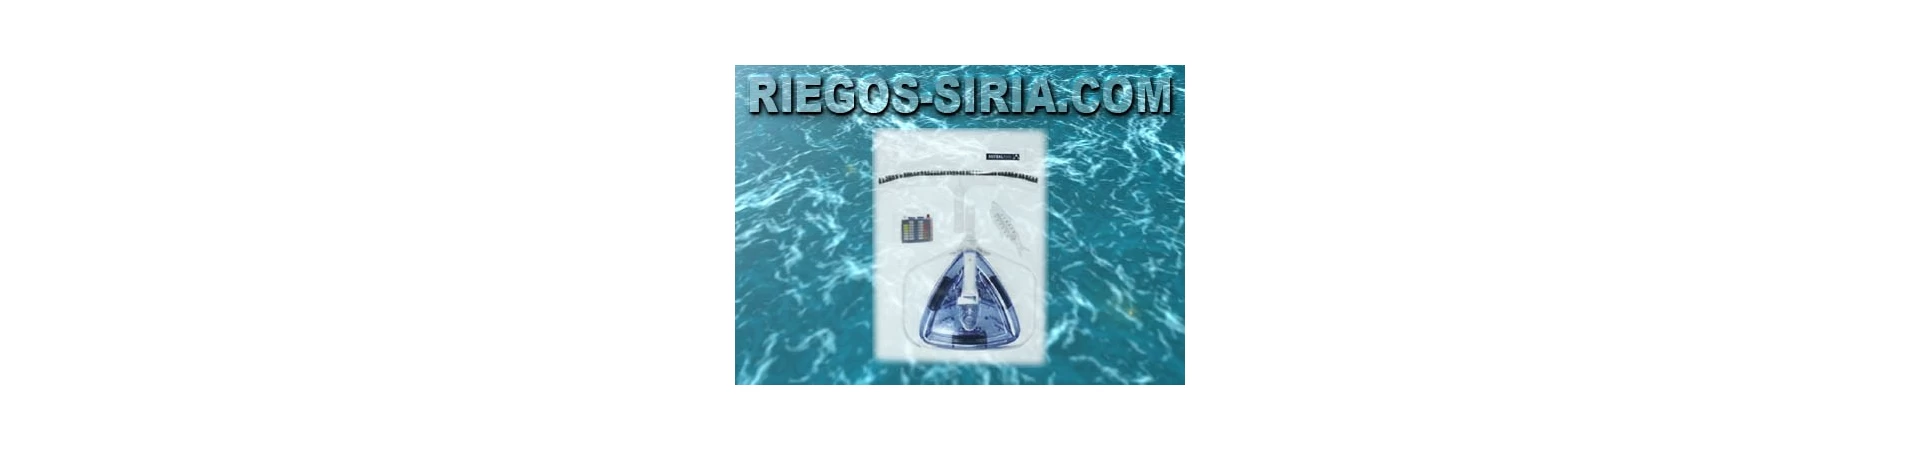 Riegos-siria.com | Kit de limpieza para piscinas | Sevilla